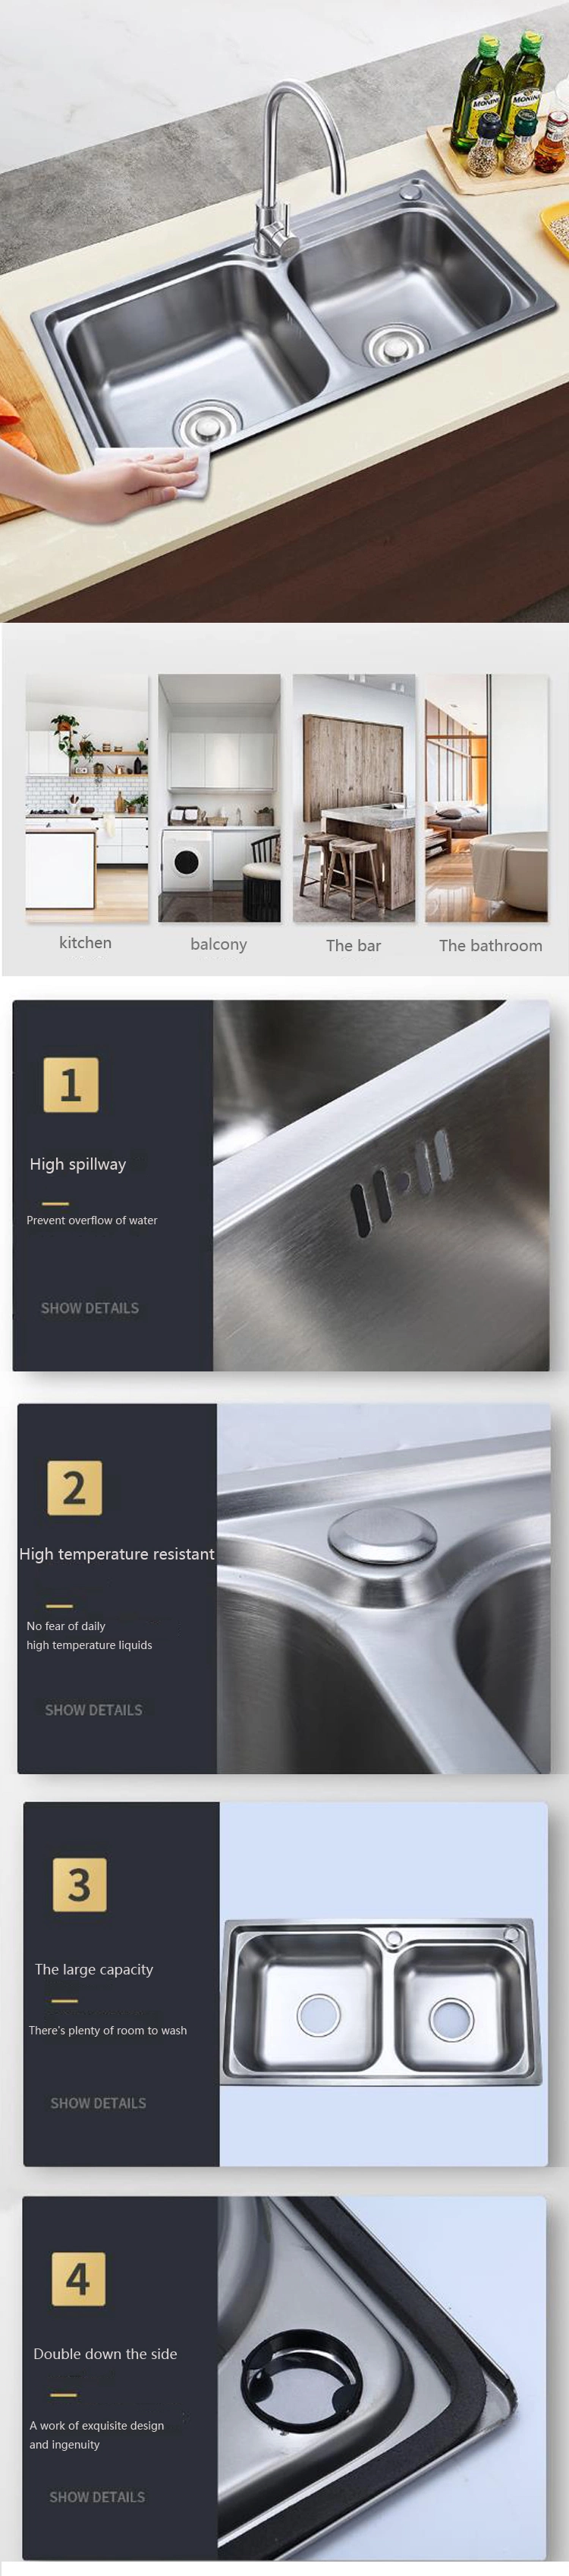 Best Selling Luxury Style Handmade Stainless Steel Kitchen Sink Double Bowl Silver Kitchen Sink